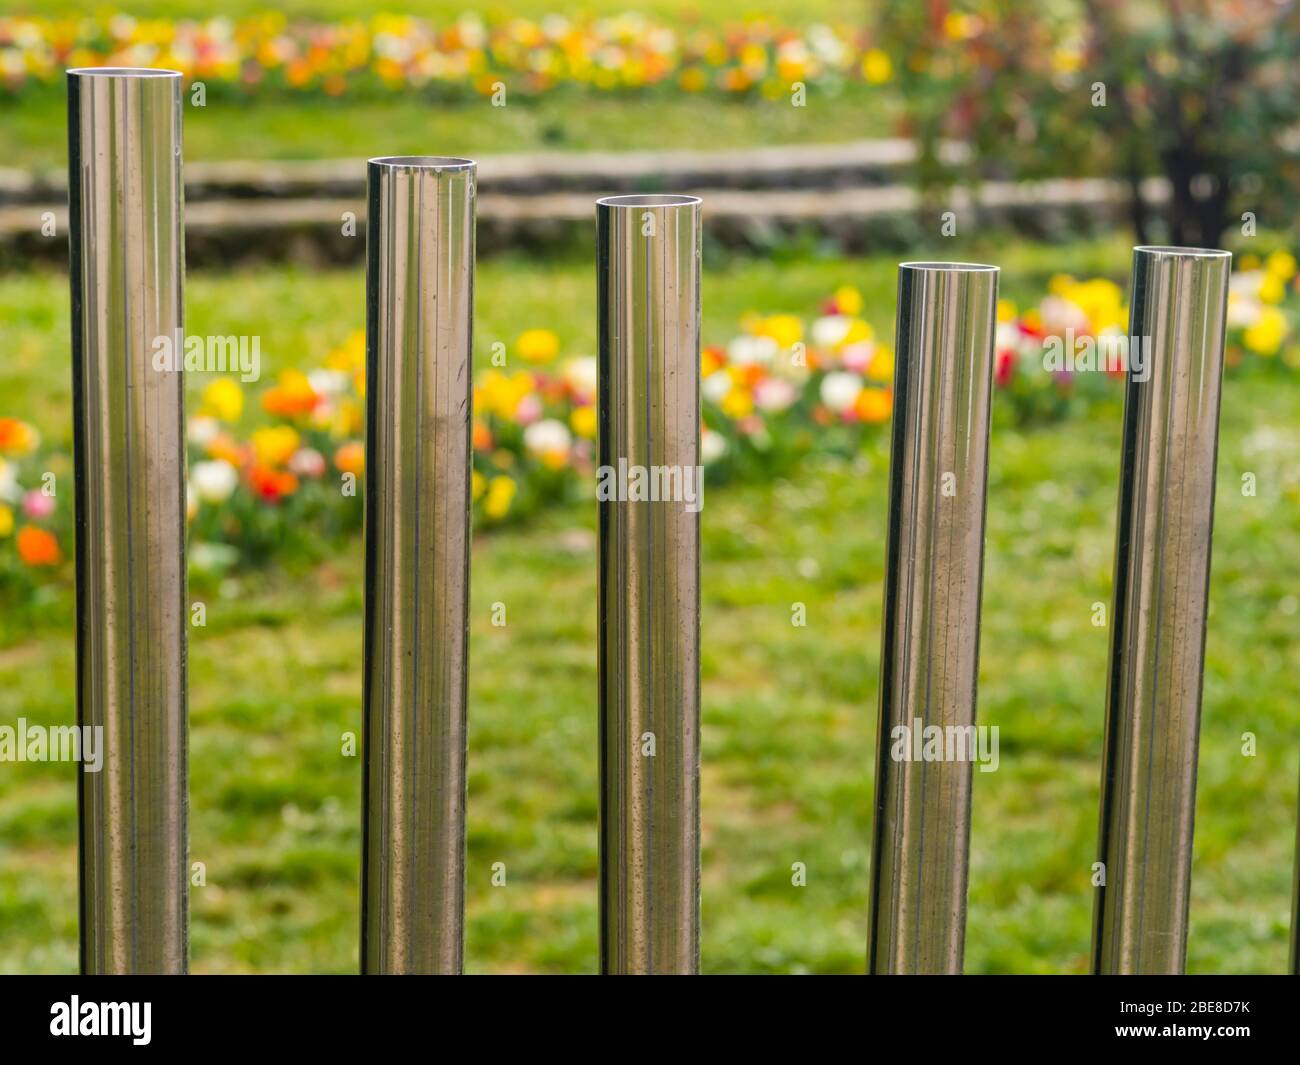 Park in Mlaka suburb in Rijeka Croatia metal music instrument panels and flowers in background Stock Photo